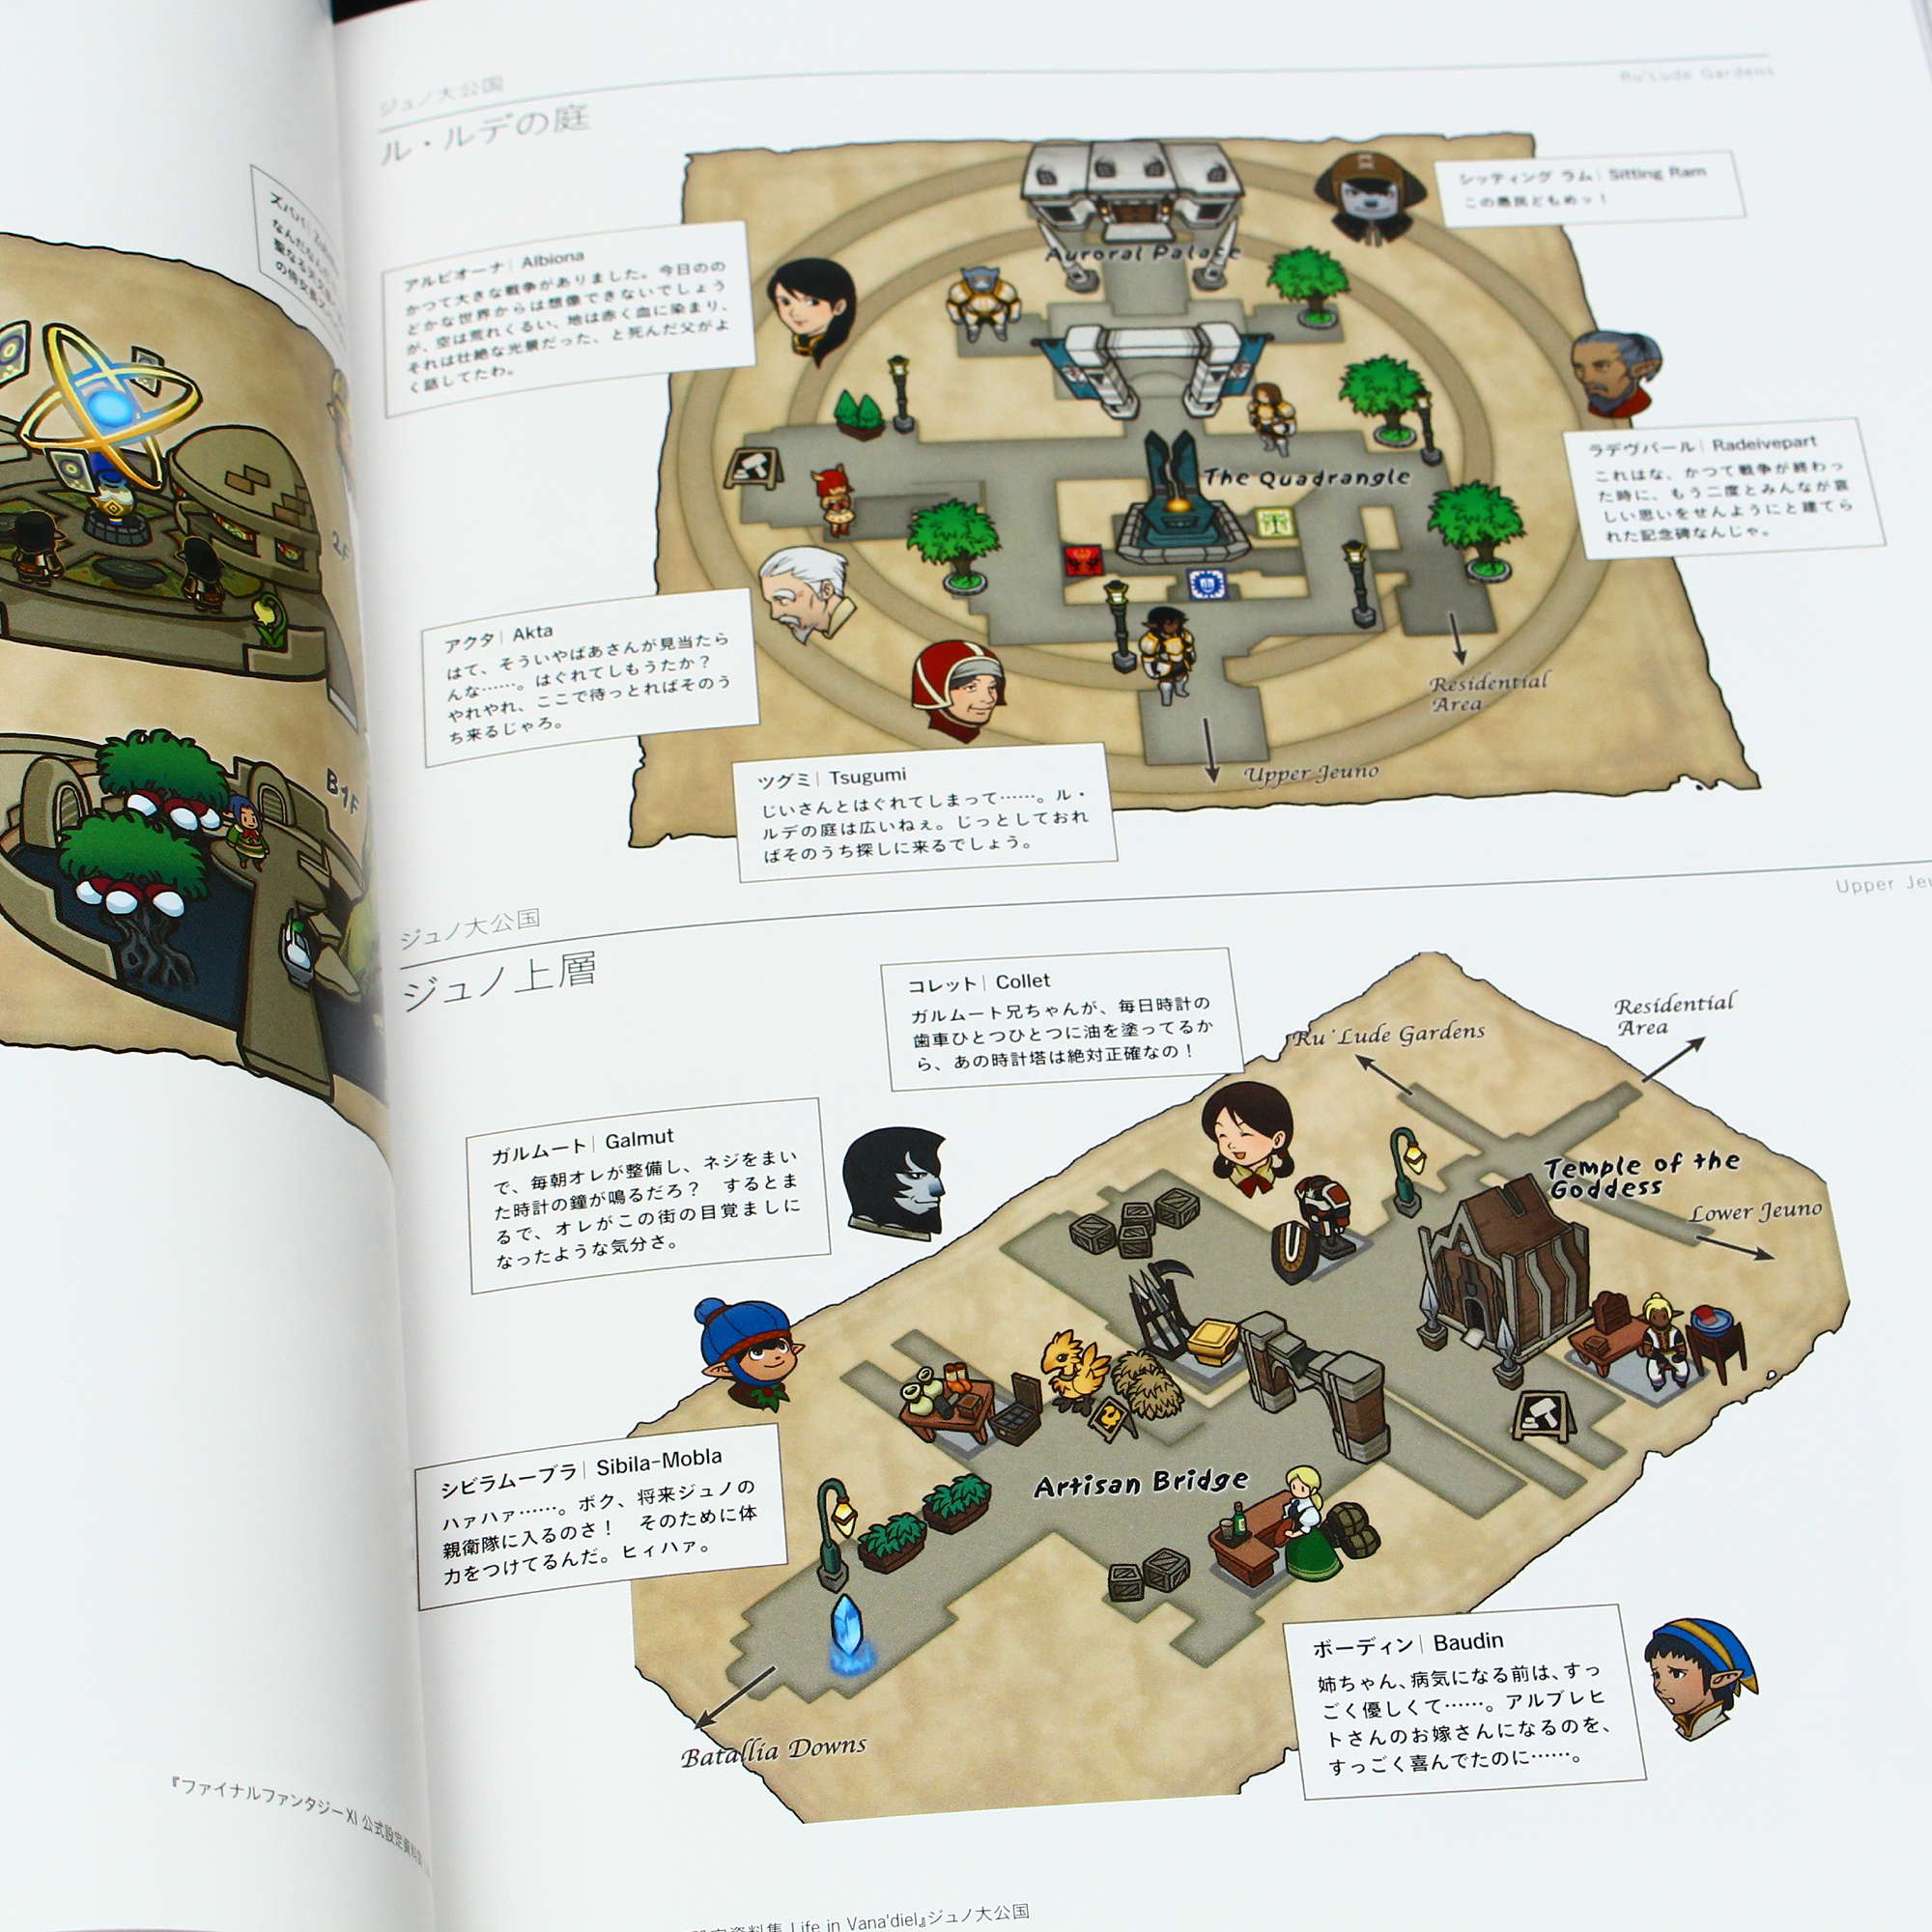 Final Fantasy XI 11 Minagawa Fumio Illustrations Art Book MMORPG Game  Design